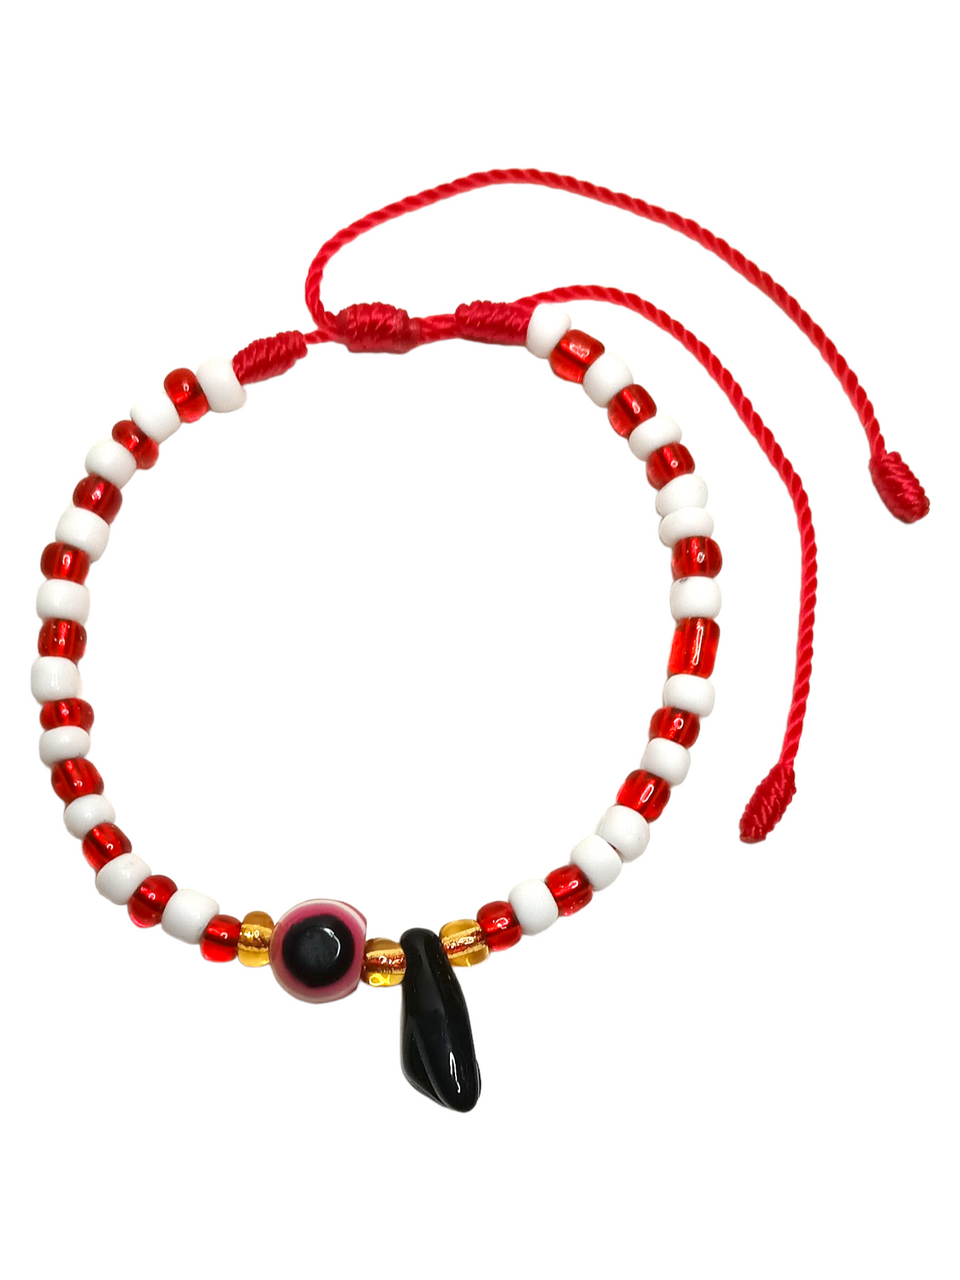 Azabache Red Evil Eye Red/White Spiritual Bracelet For Protection, Ward Off  Evil, Good Luck, ETC. - Lazaro Brand Spiritual Store